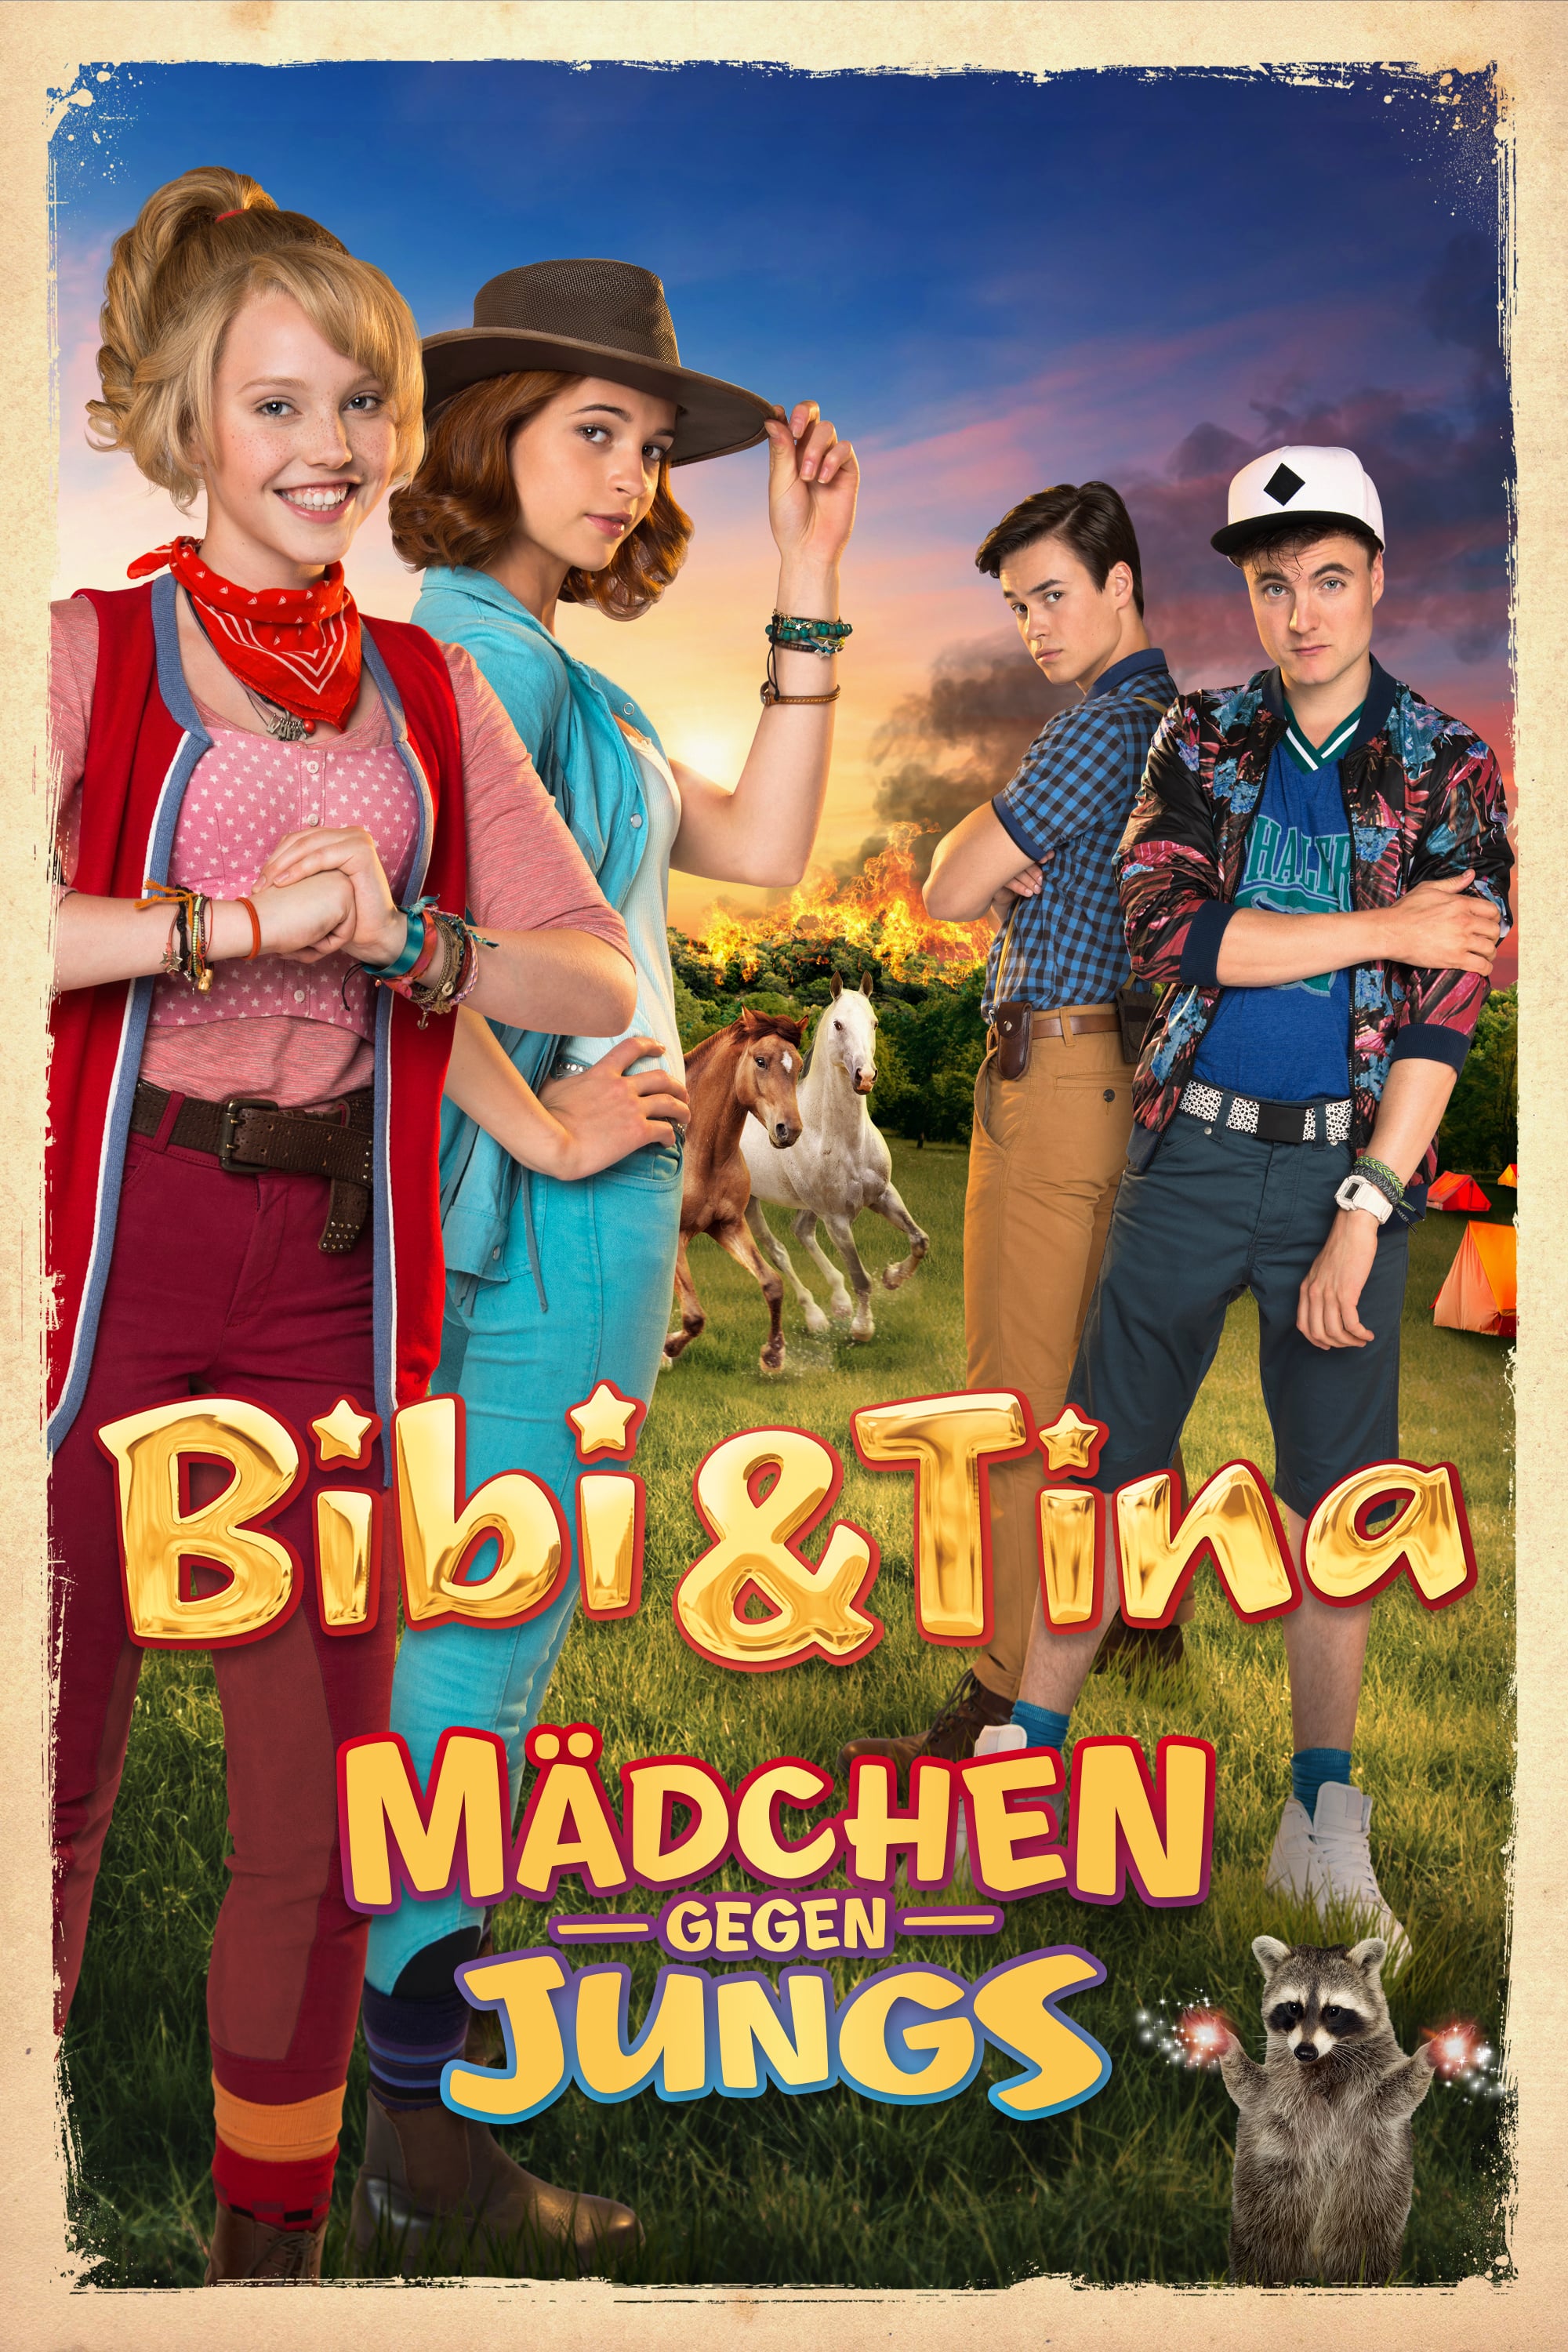 Caratula de Bibi & Tina - Mädchen gegen Jungs (Bibi y Tina: Chicas contra chicos) 